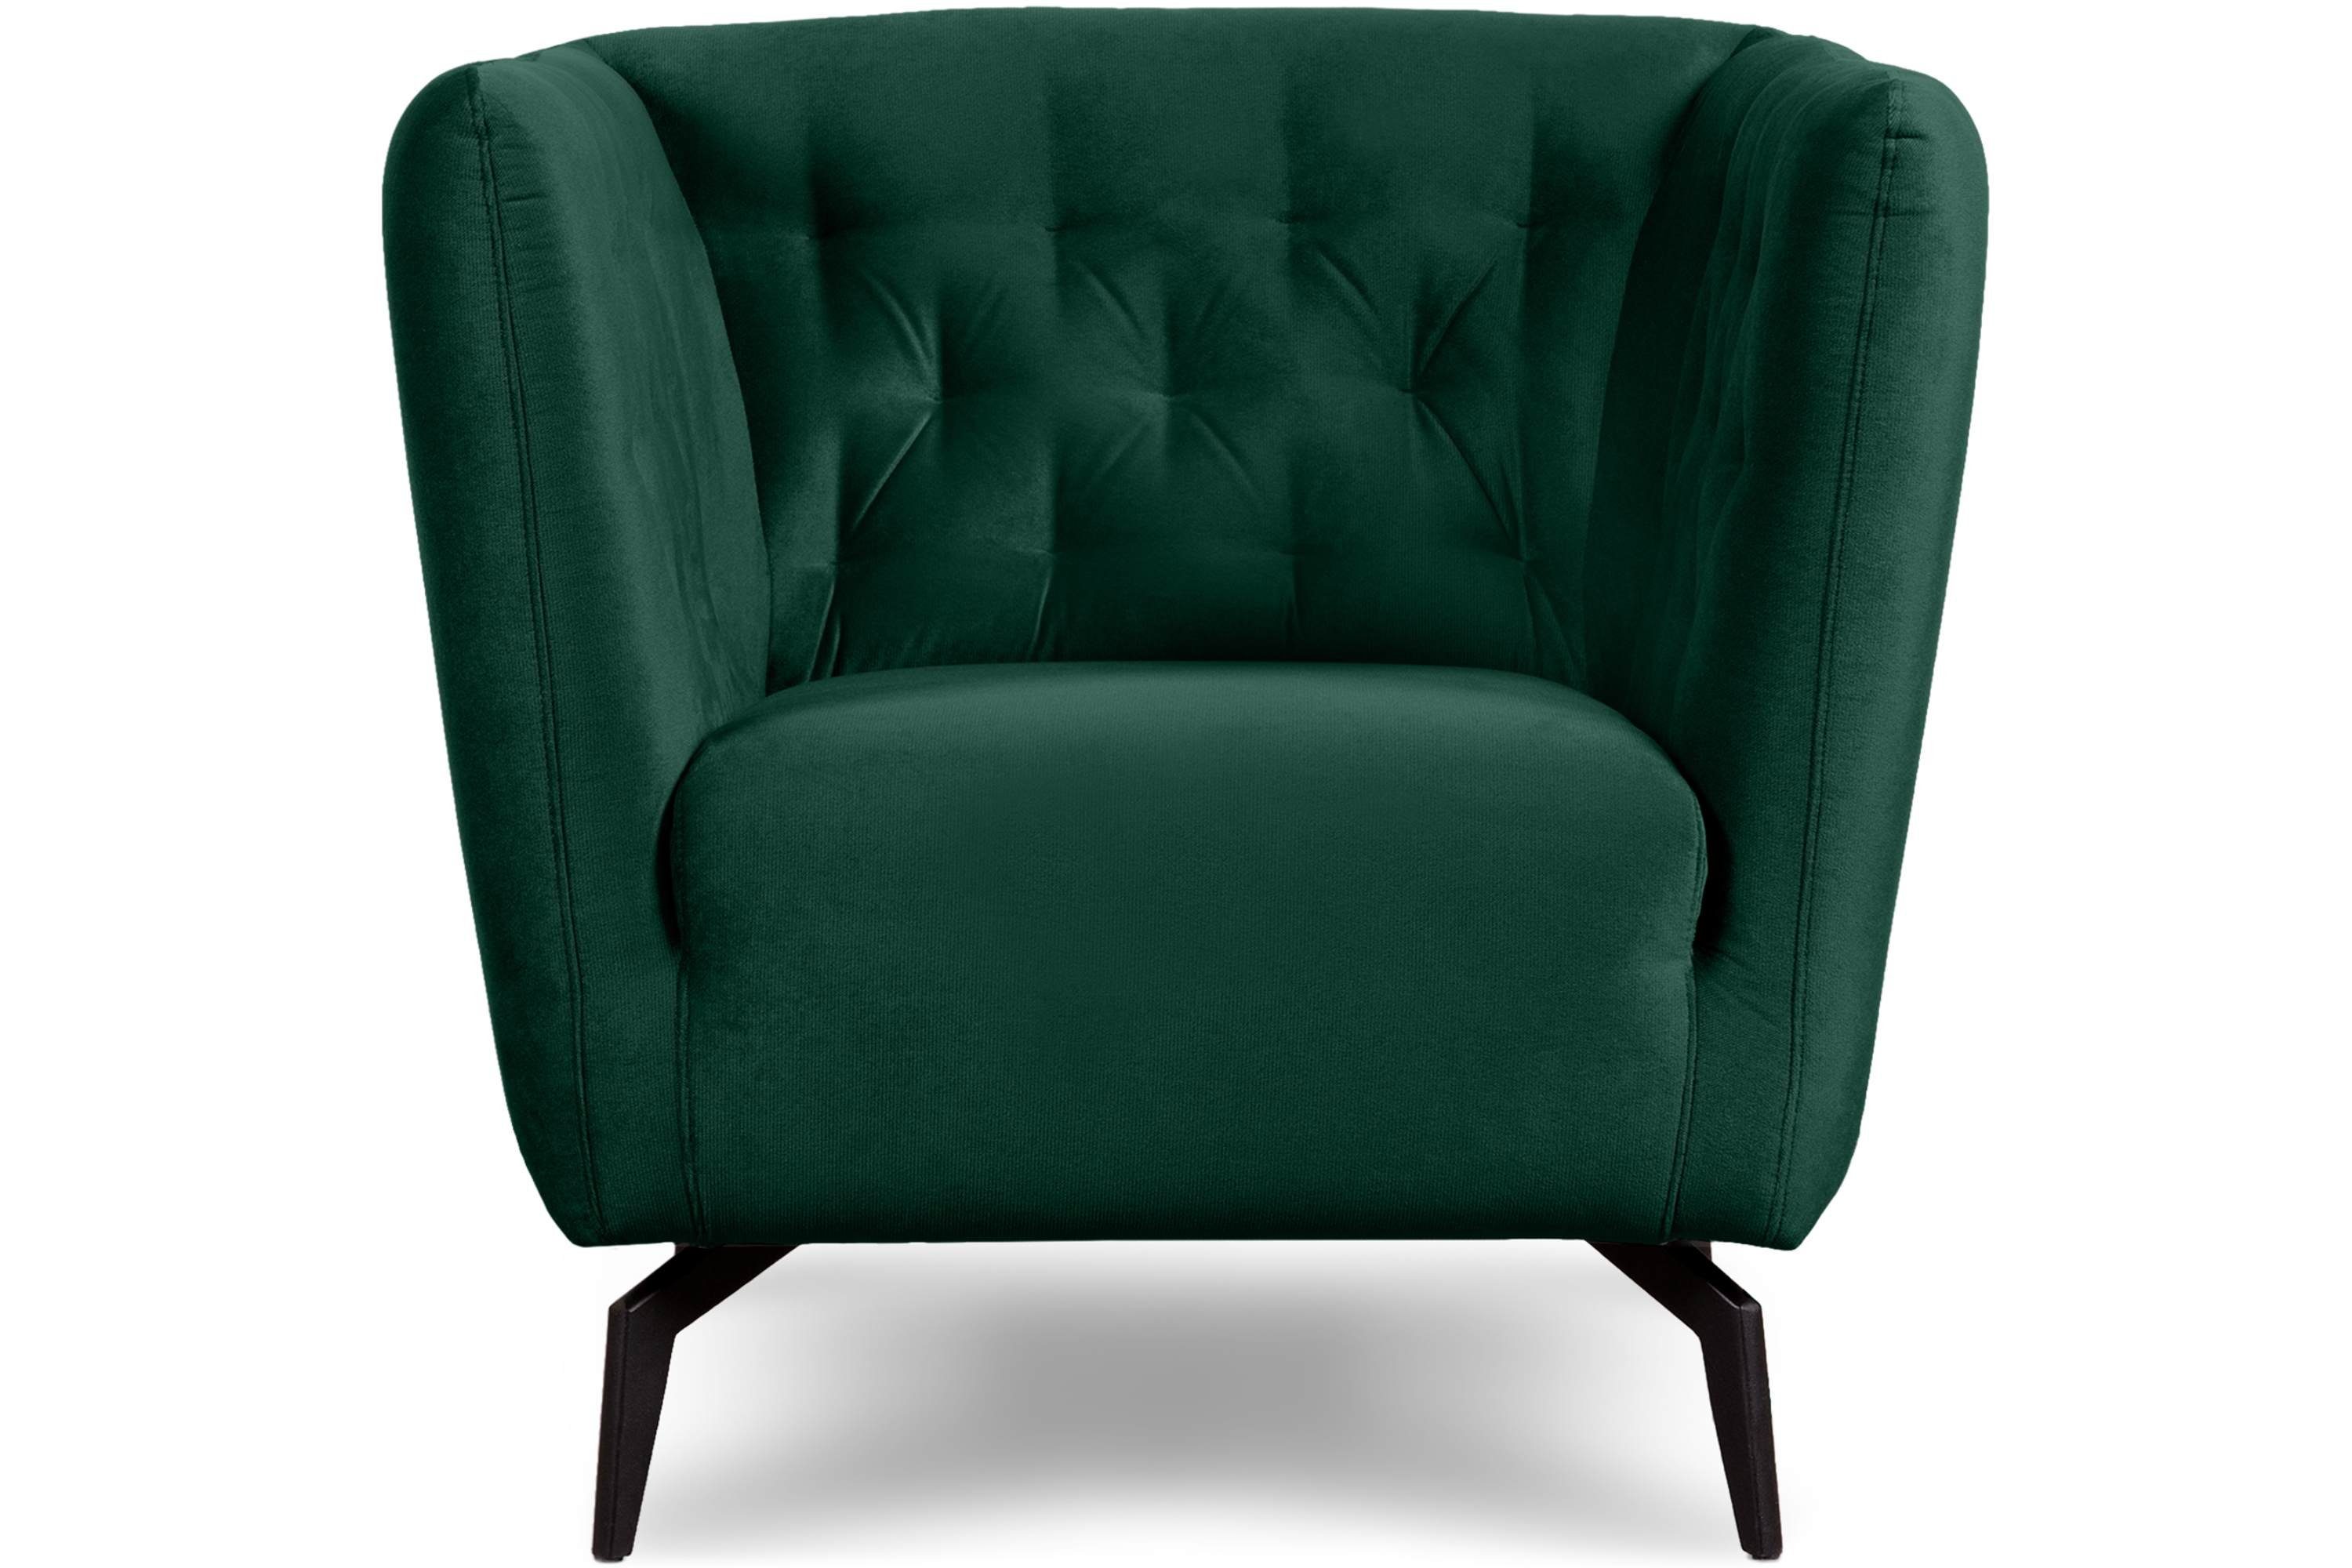 Sitz gewellte und Sessel, im CORDI hohen Gesteppter Schaumstoff Sessel Feder dunkelgrün Konsimo dunkelgrün | Metallfüßen, auf